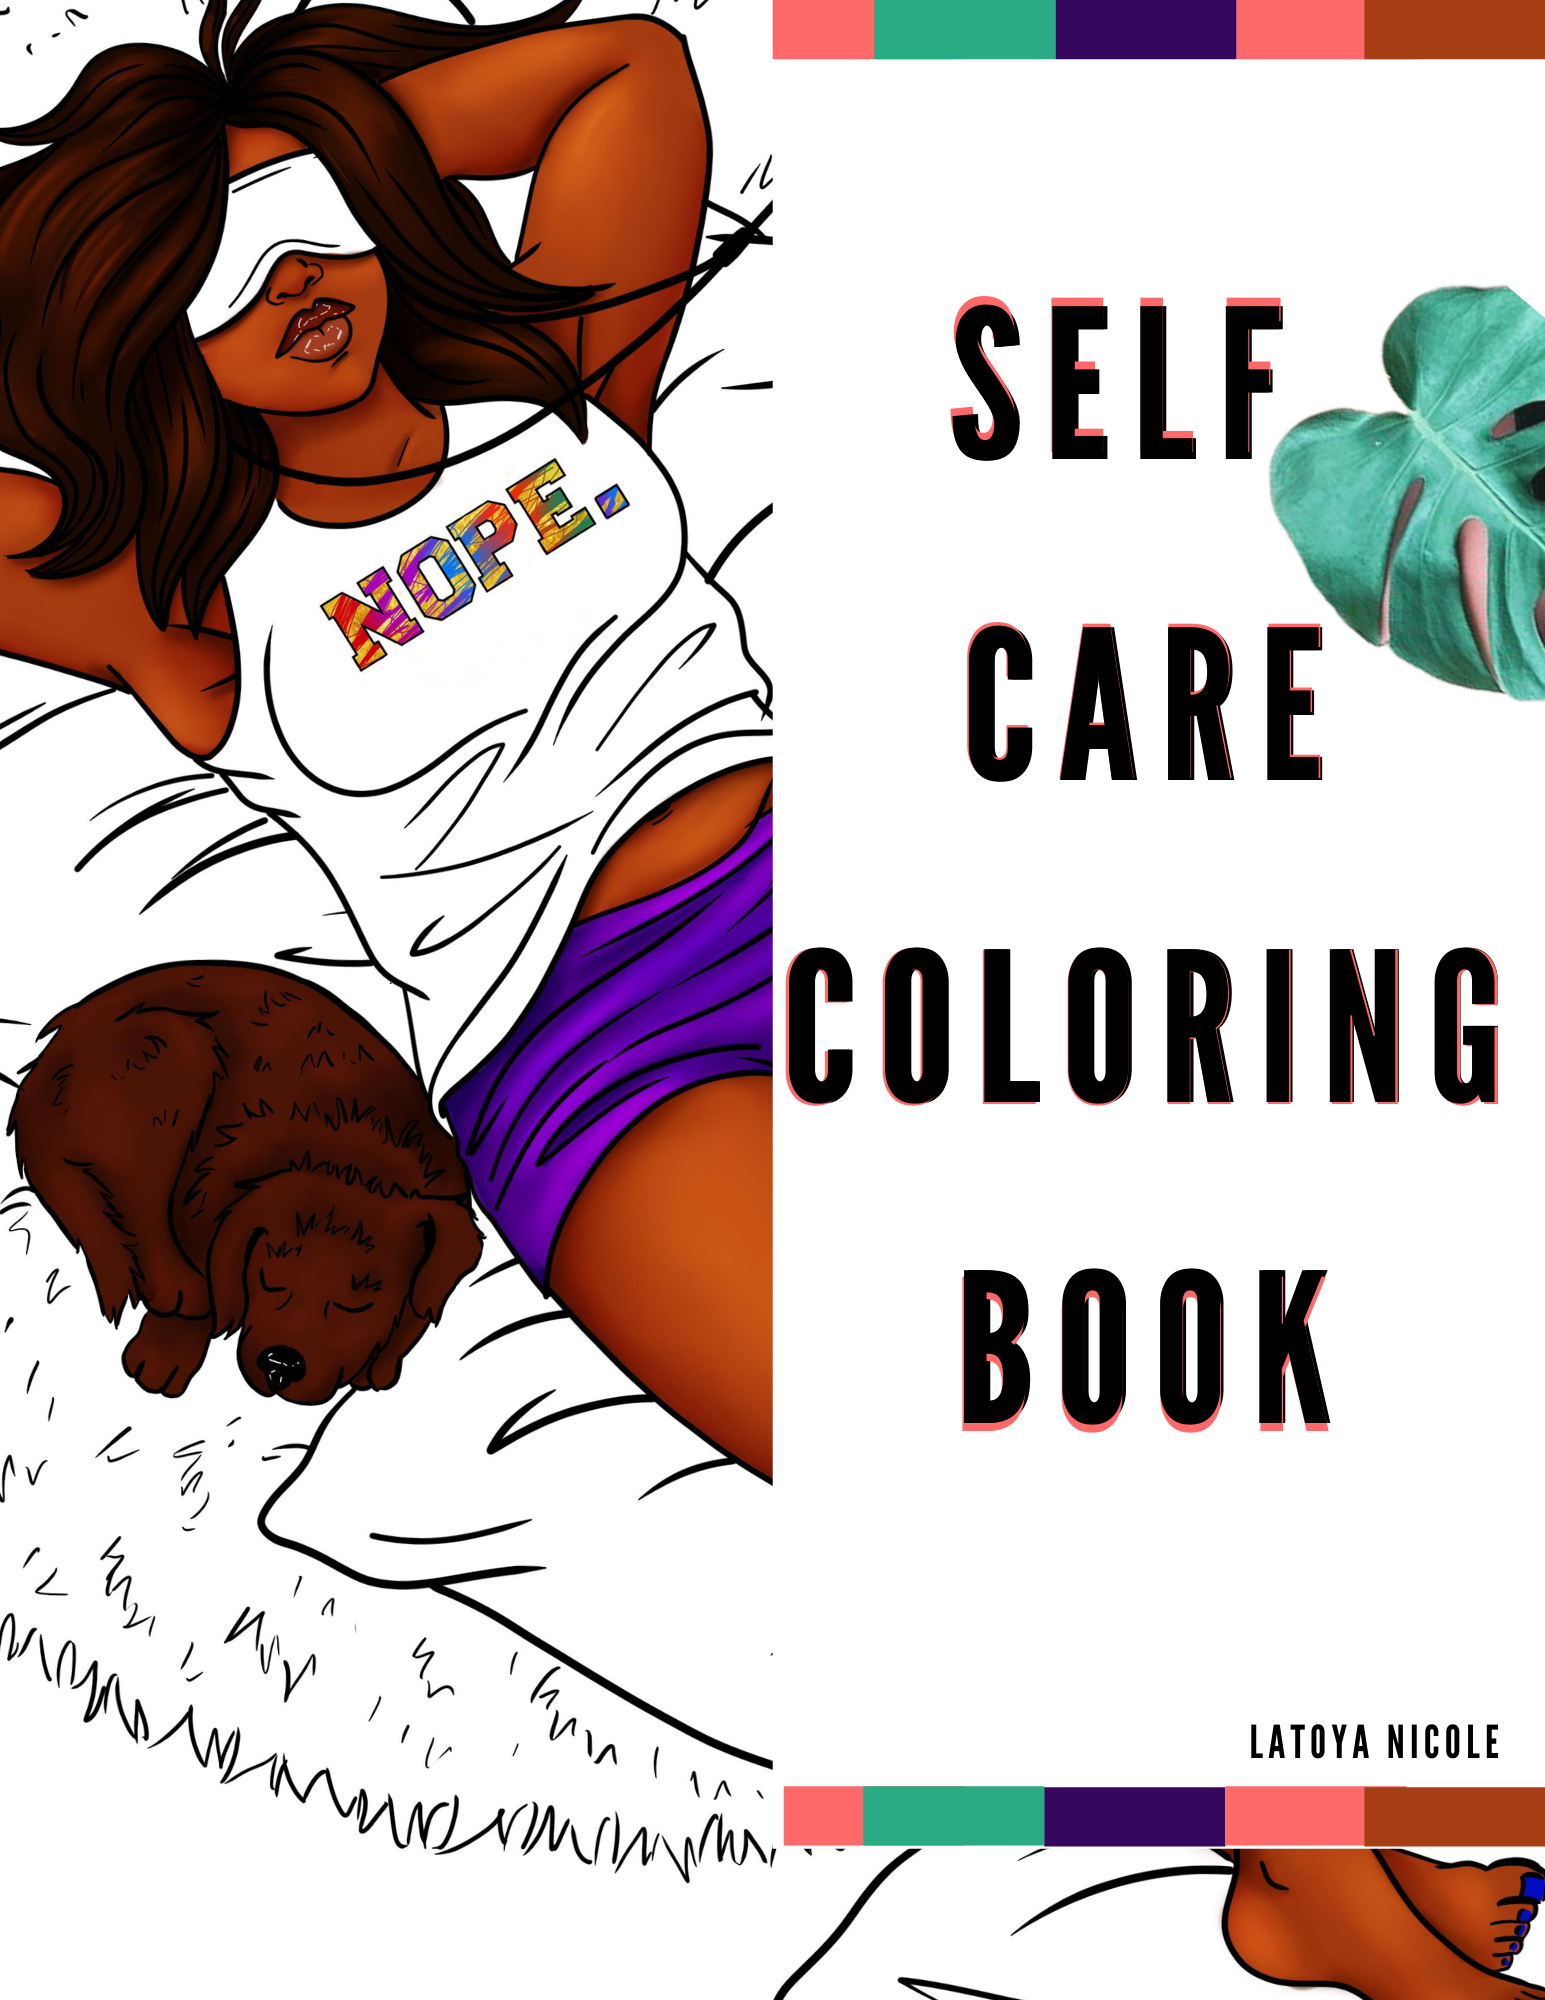 Self care coloring book download â entrepreneurs color too